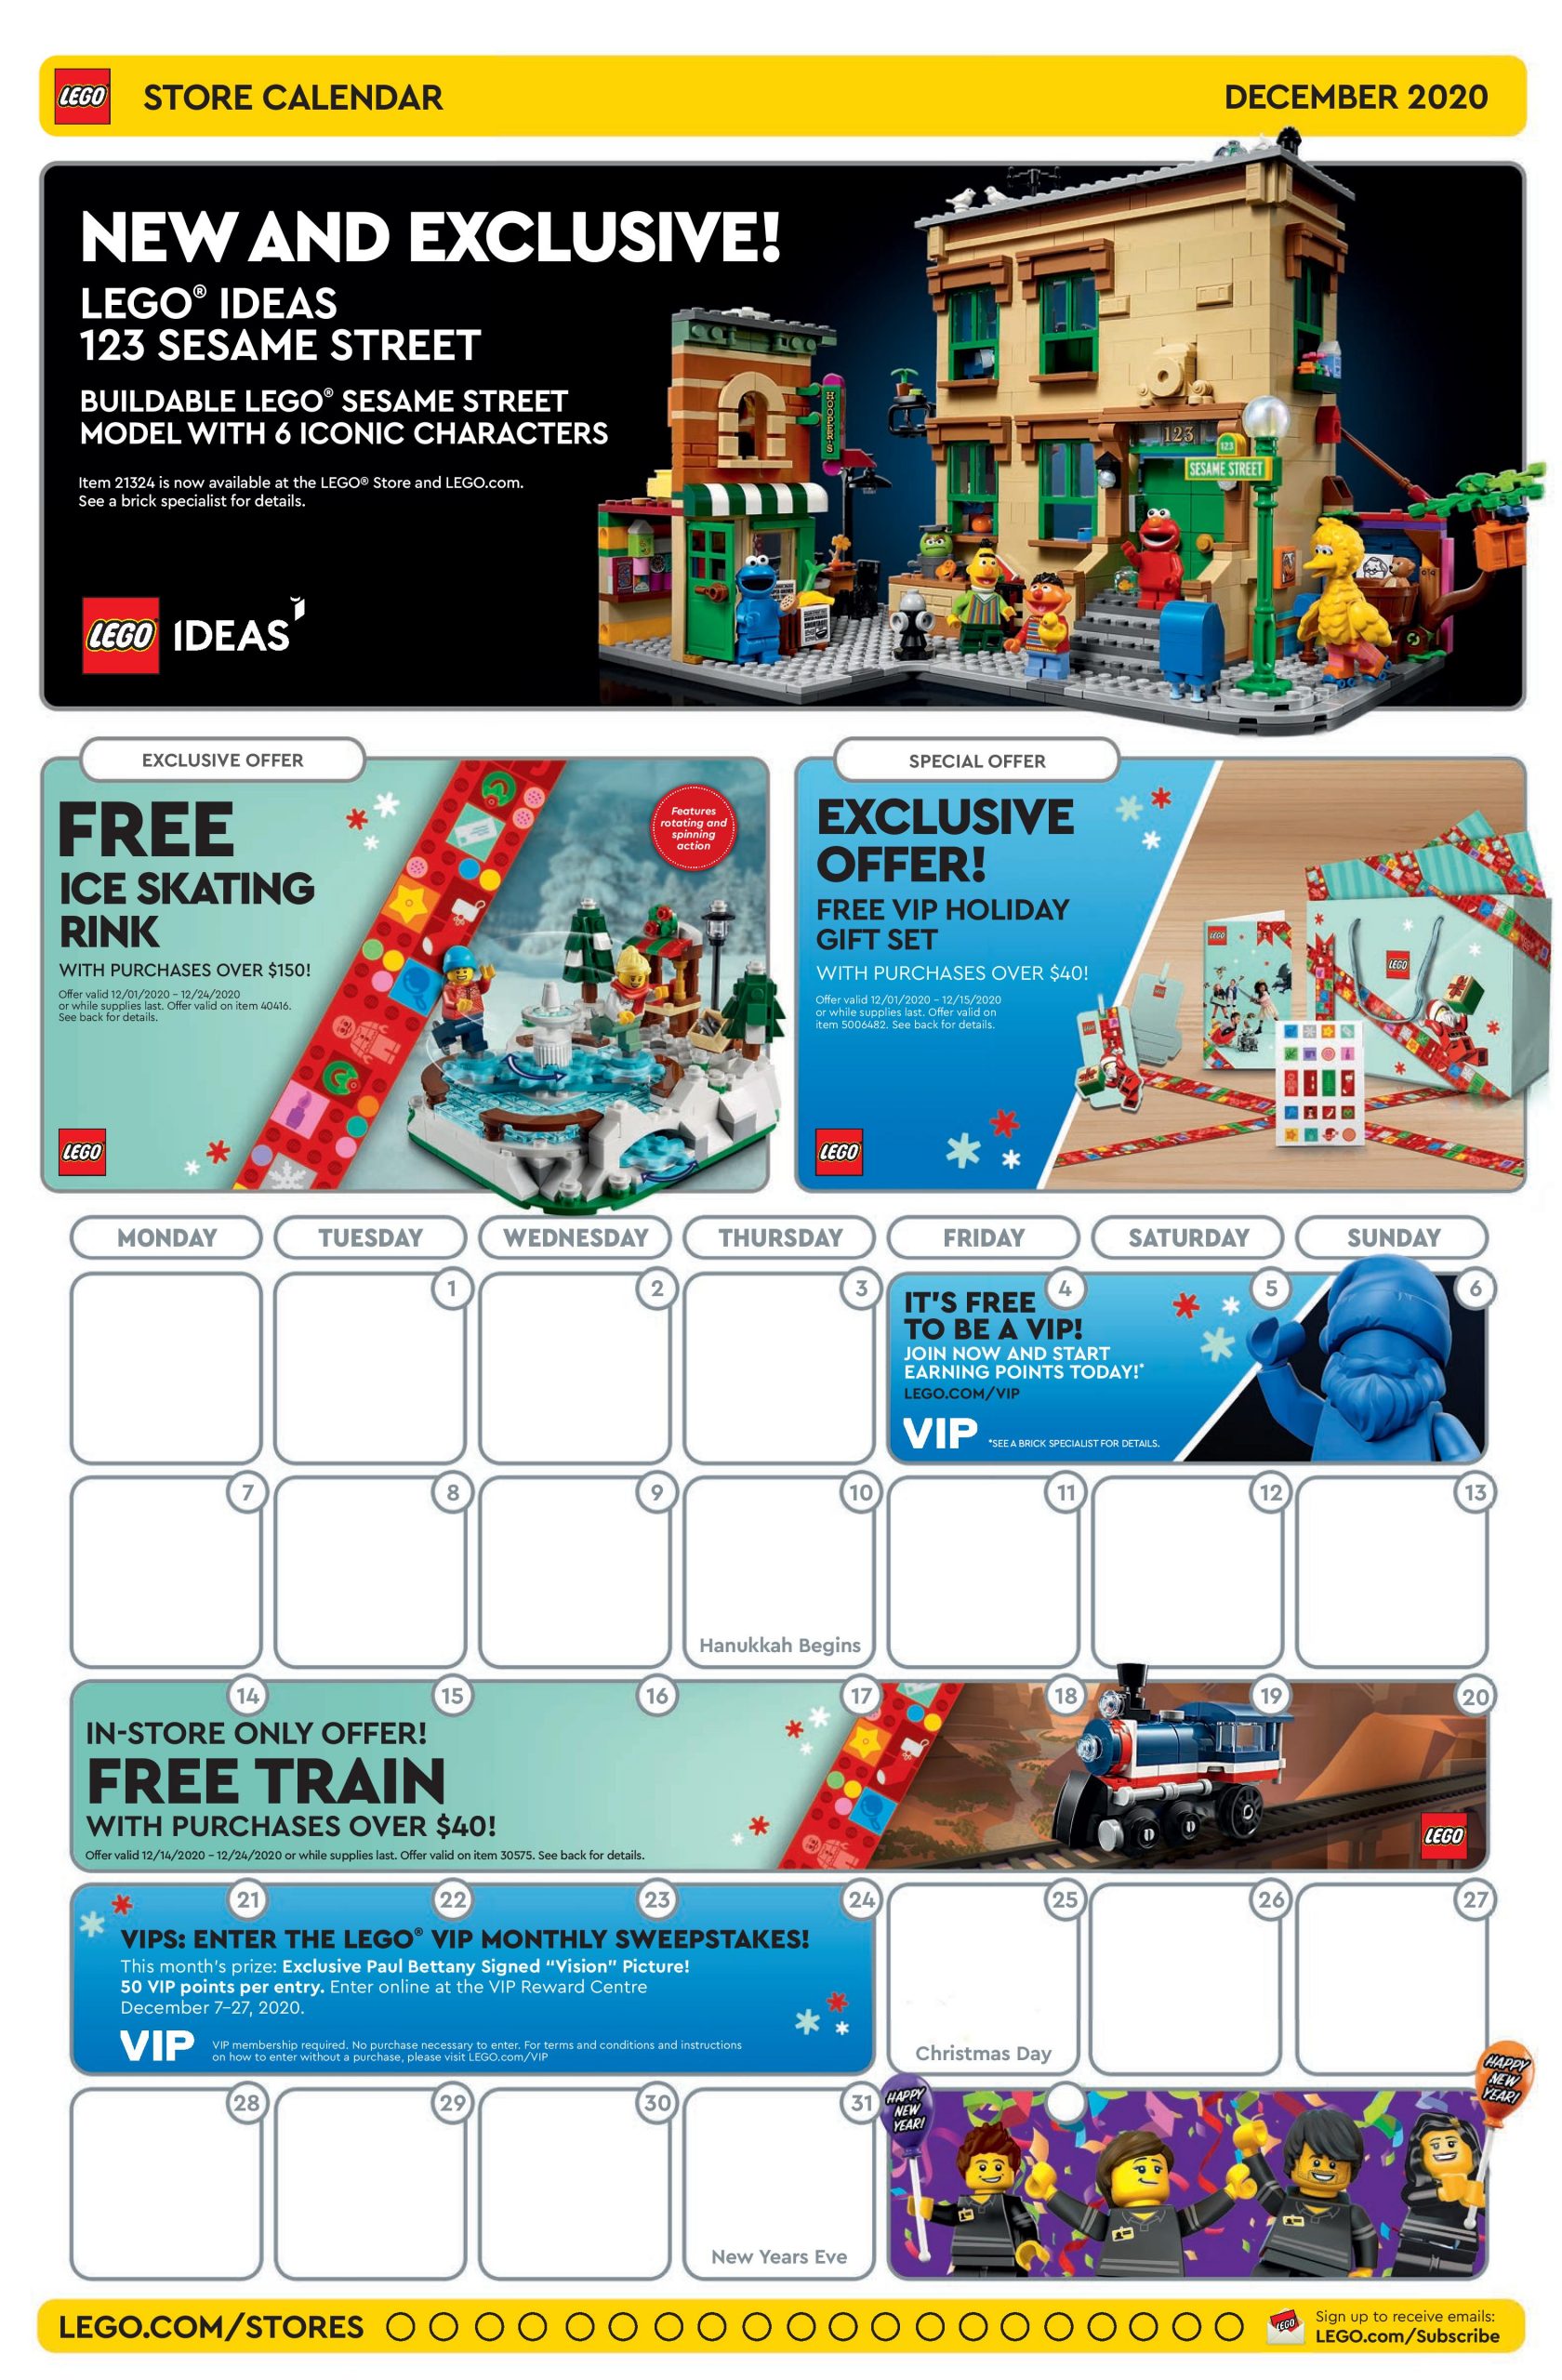 LEGO Store Calendar Promotions & Events - Brick